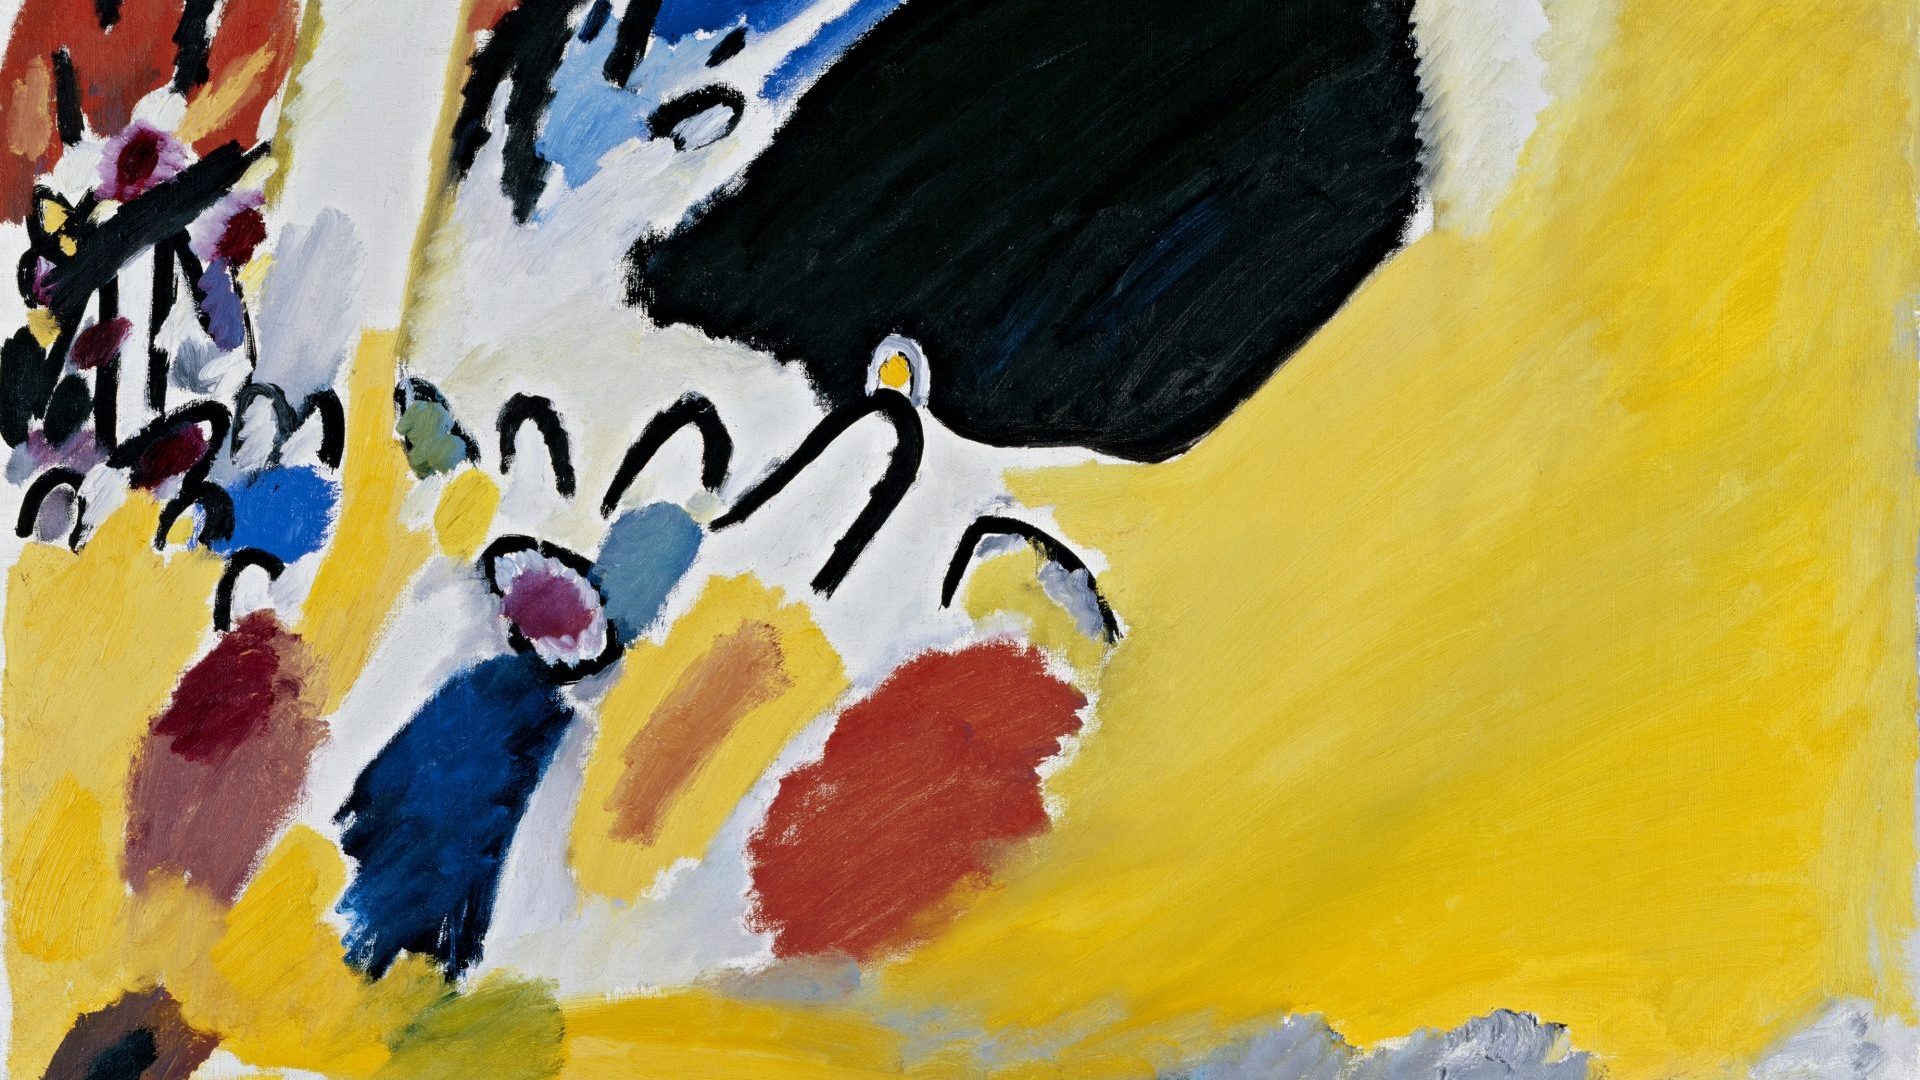 Wassily Kandinsky’s Impression III (Concert), 1911. Image courtesy of Lenbachhaus